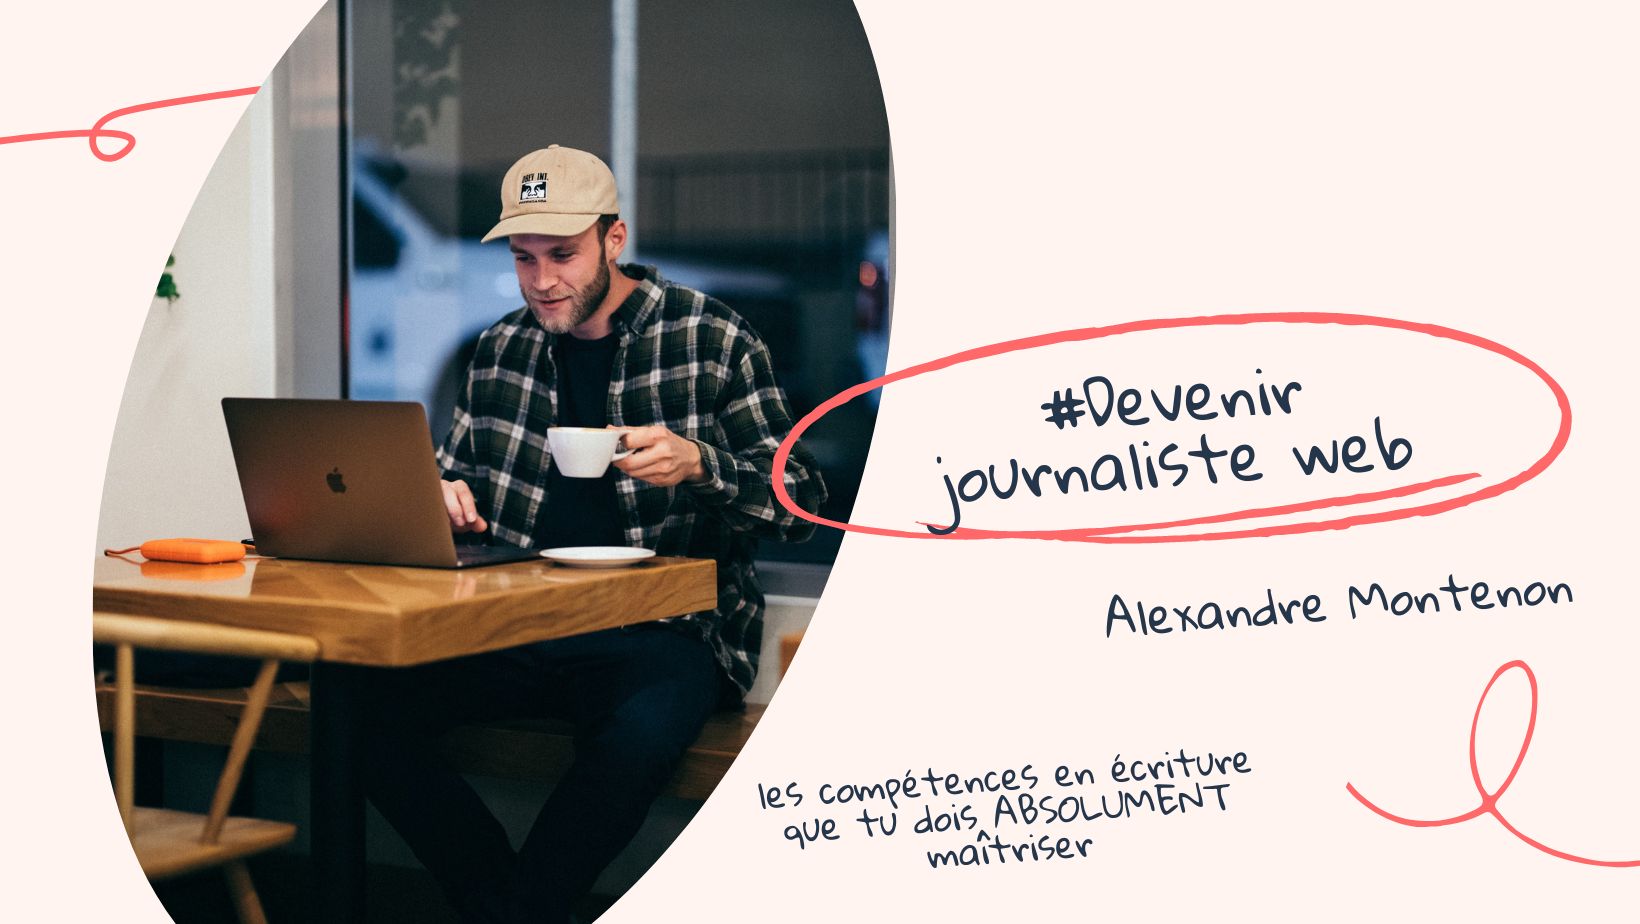 Devenir journaliste web | Alexandre Montenon